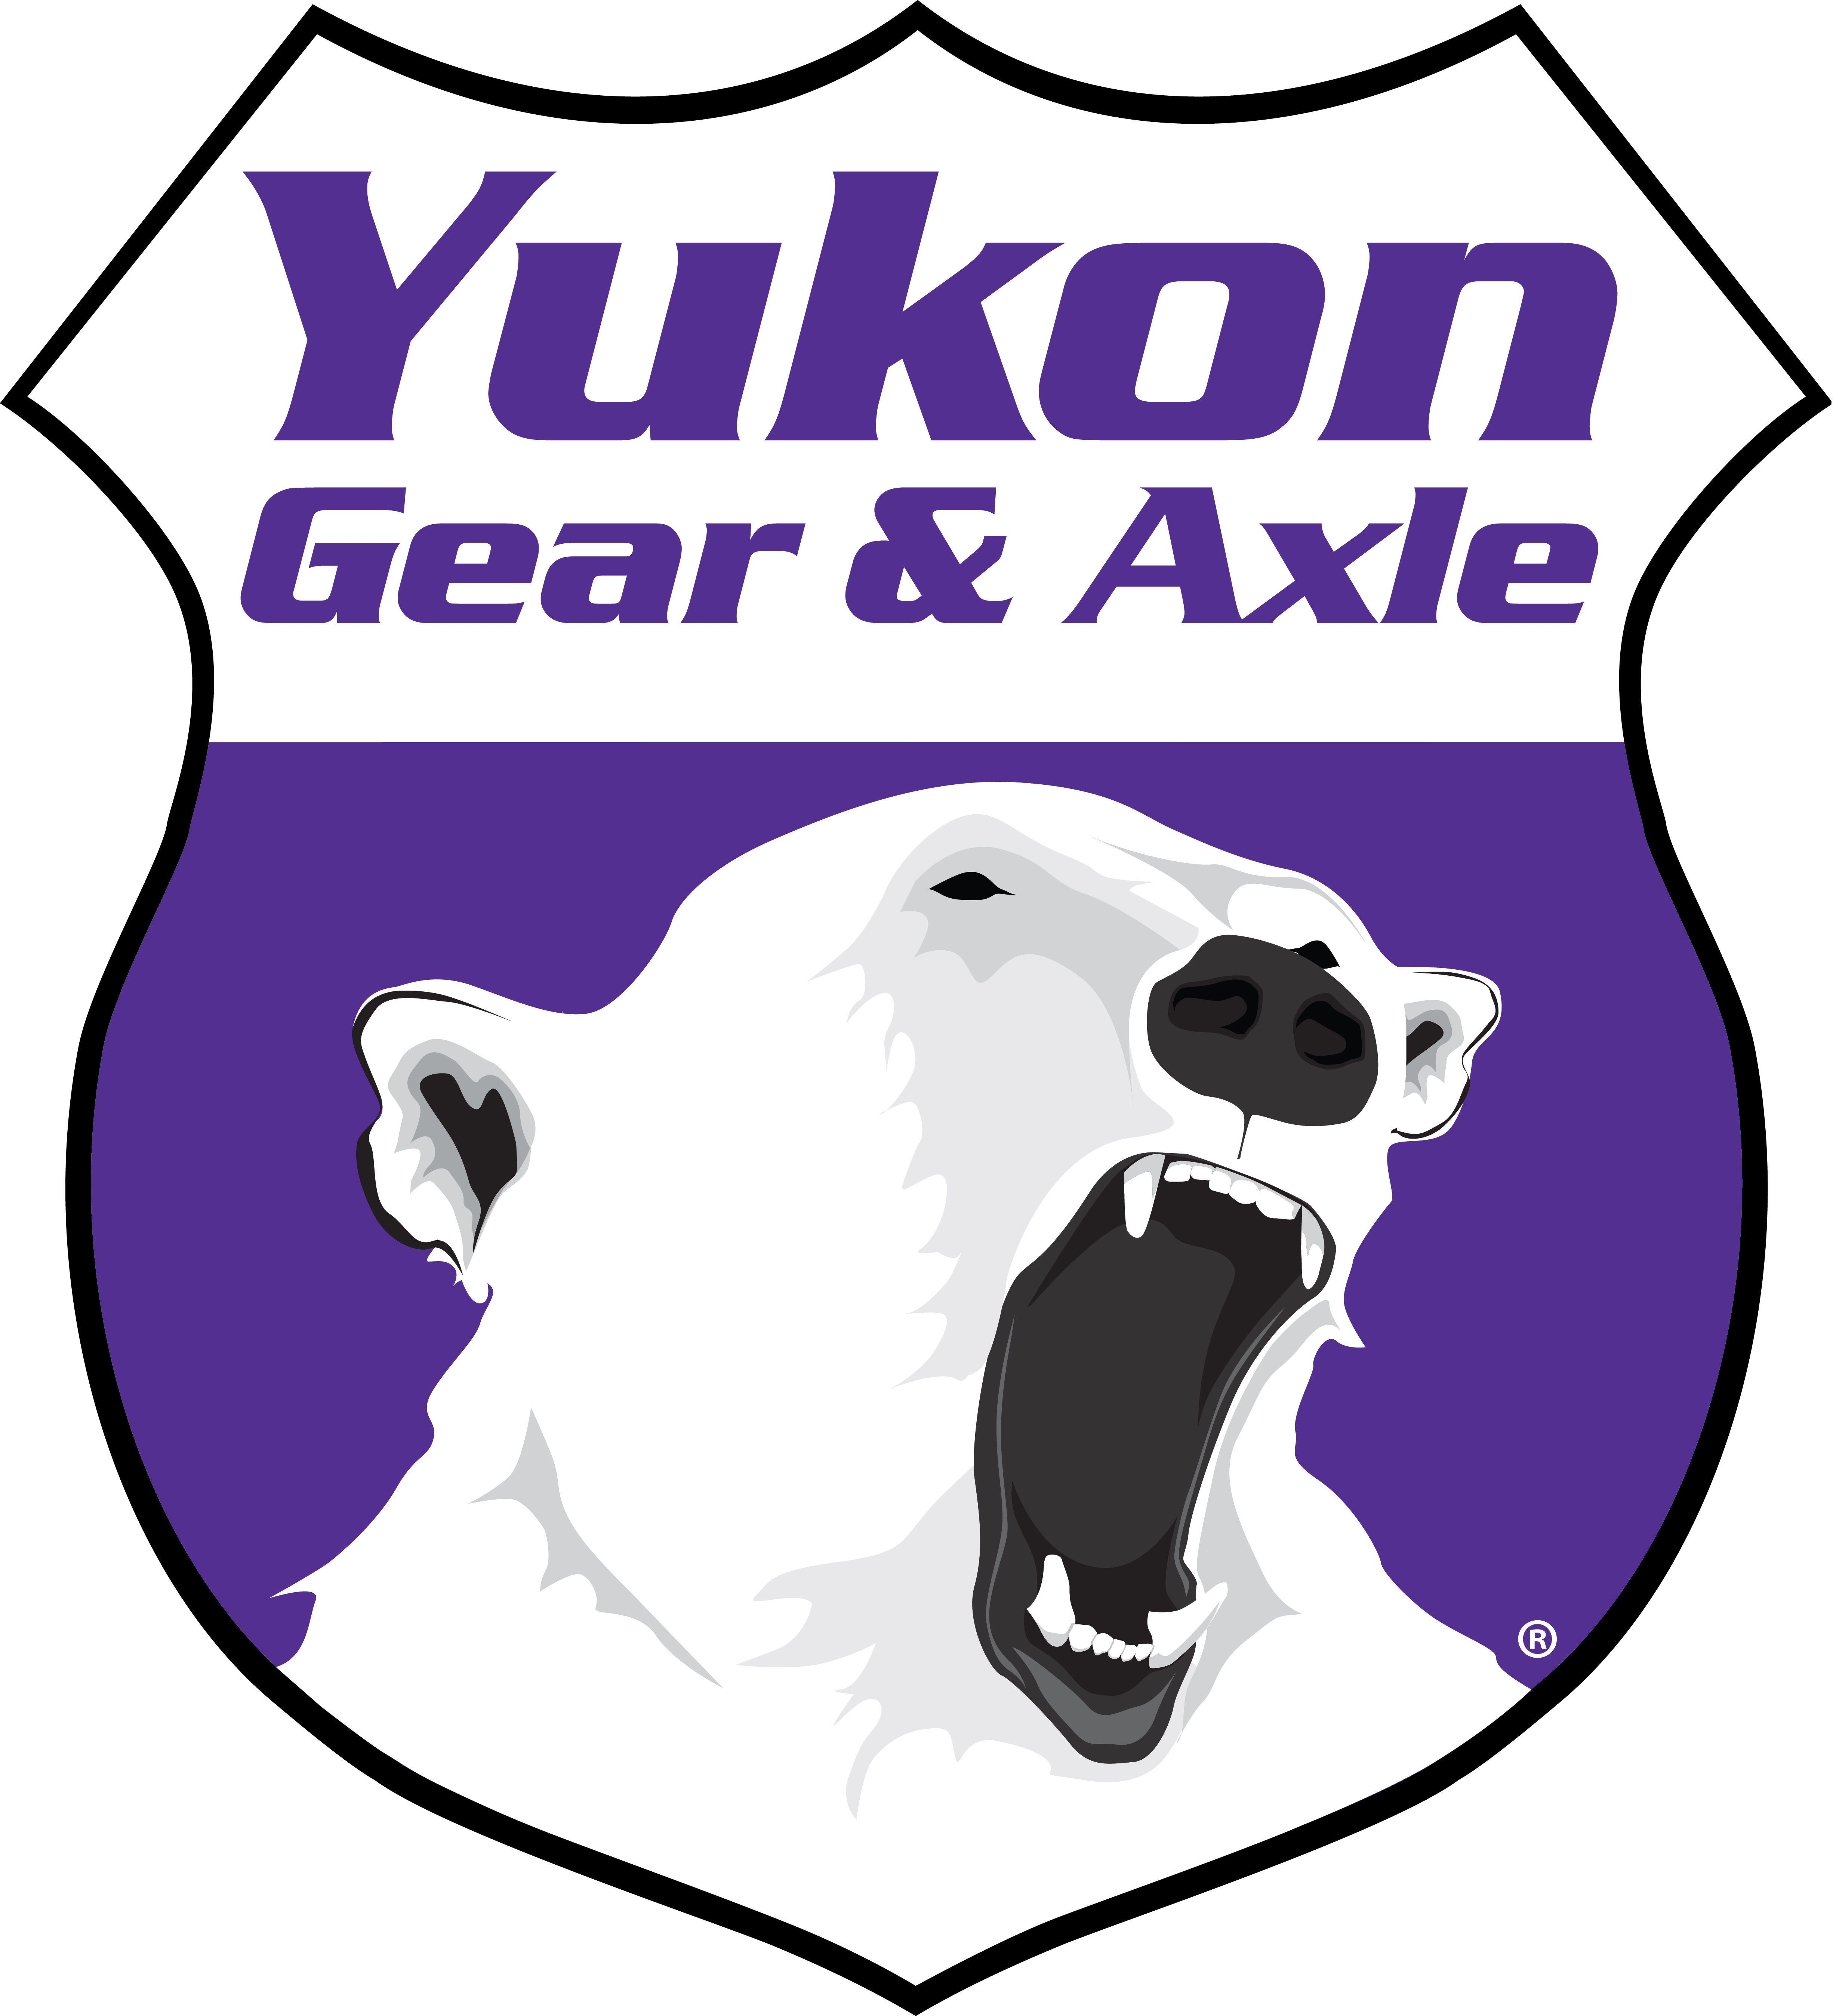 Yukon Muscle Car Limited Slip & Re-Gear Kit for GM 55P, 17 spline, 3.73 ratio